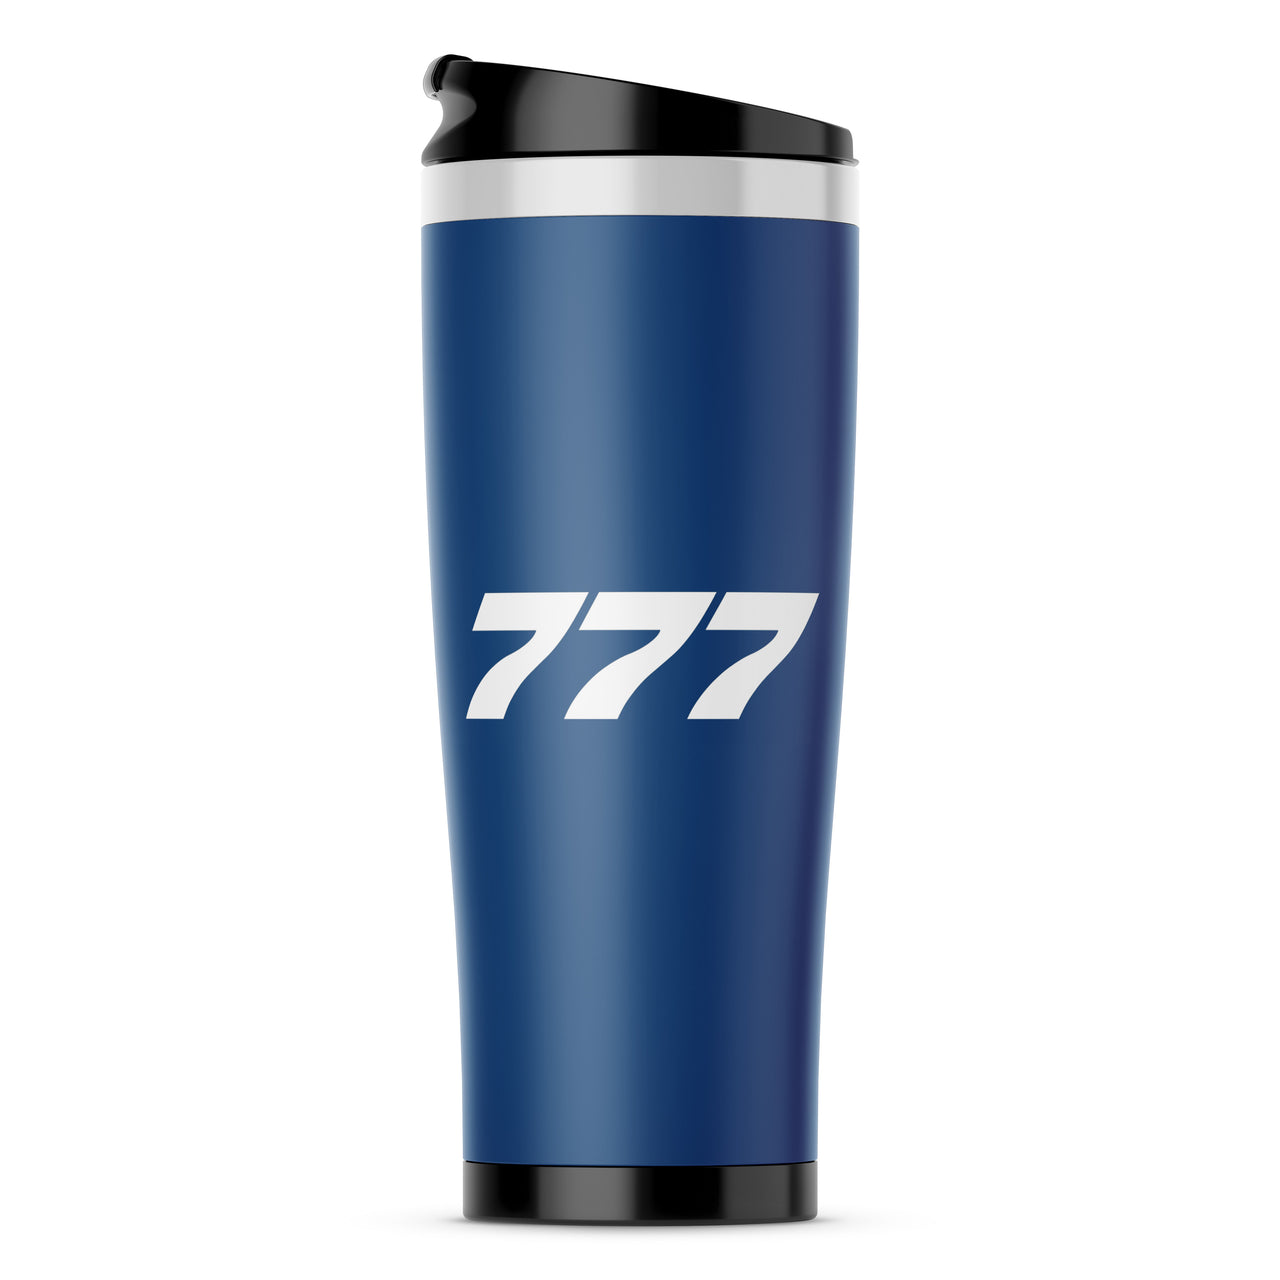 777 Flat Text Designed Travel Mugs